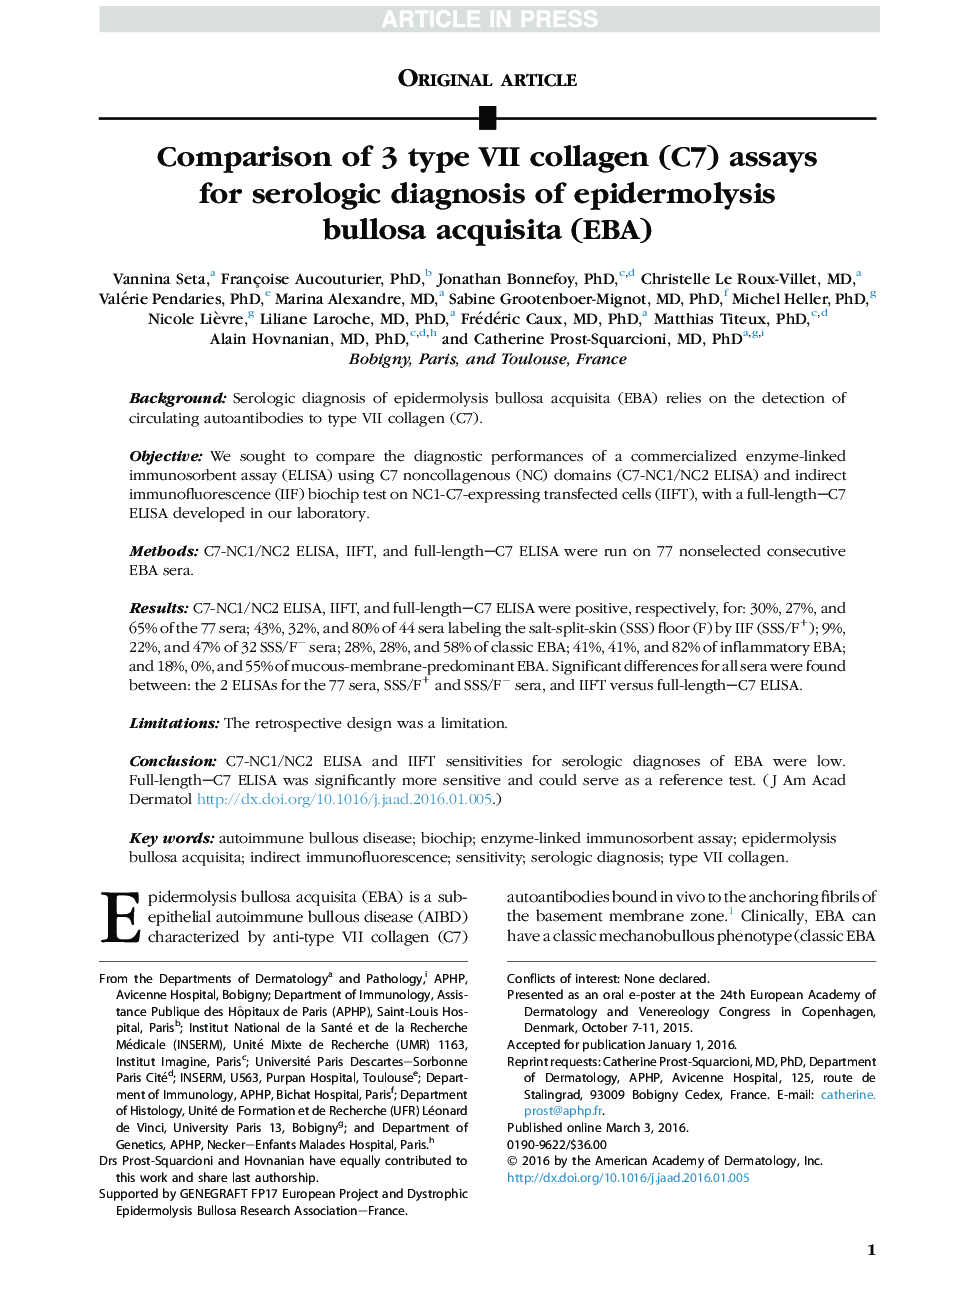 Comparison of 3 type VII collagen (C7) assays for serologic diagnosis of epidermolysis bullosa acquisita (EBA)